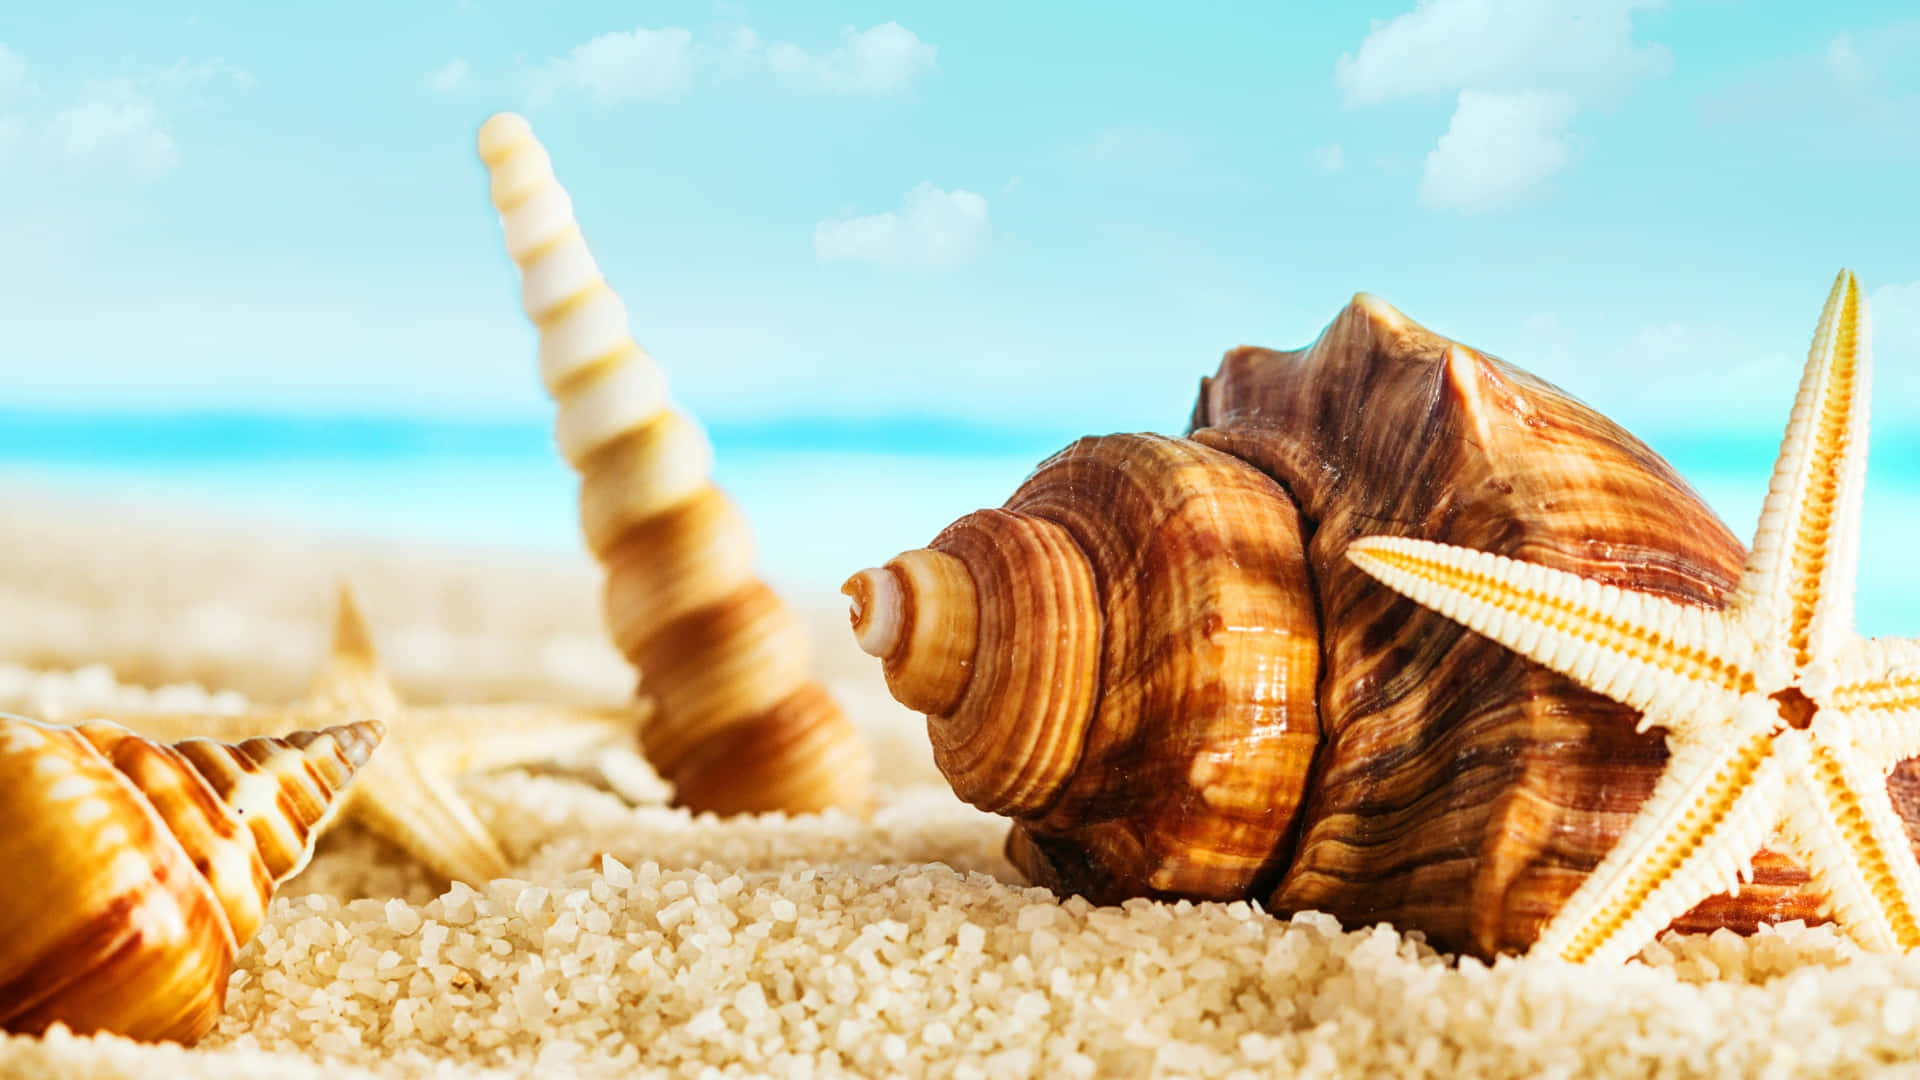 Caption: Intricate Seashell Closeup on Sandy Beach